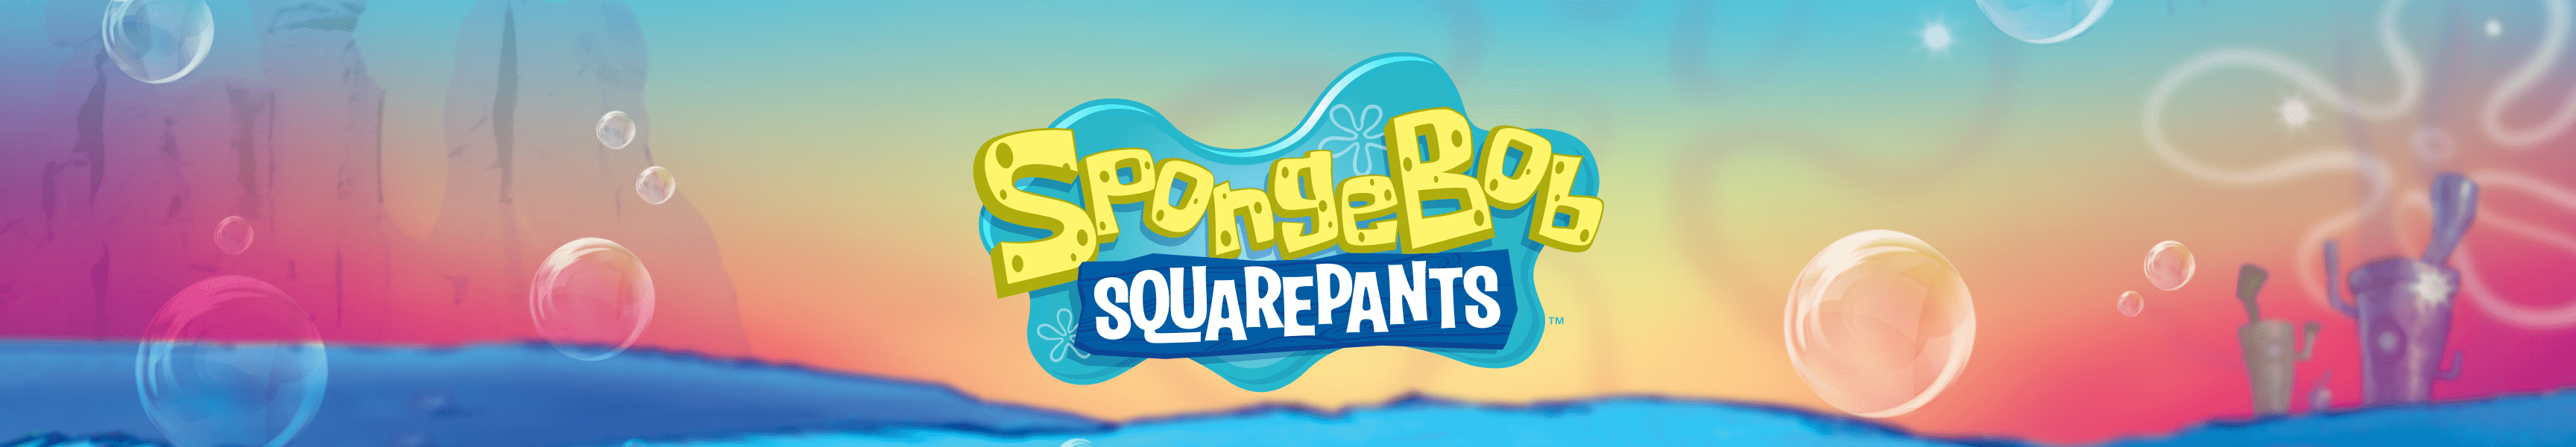 SpongeBob SquarePants Sale